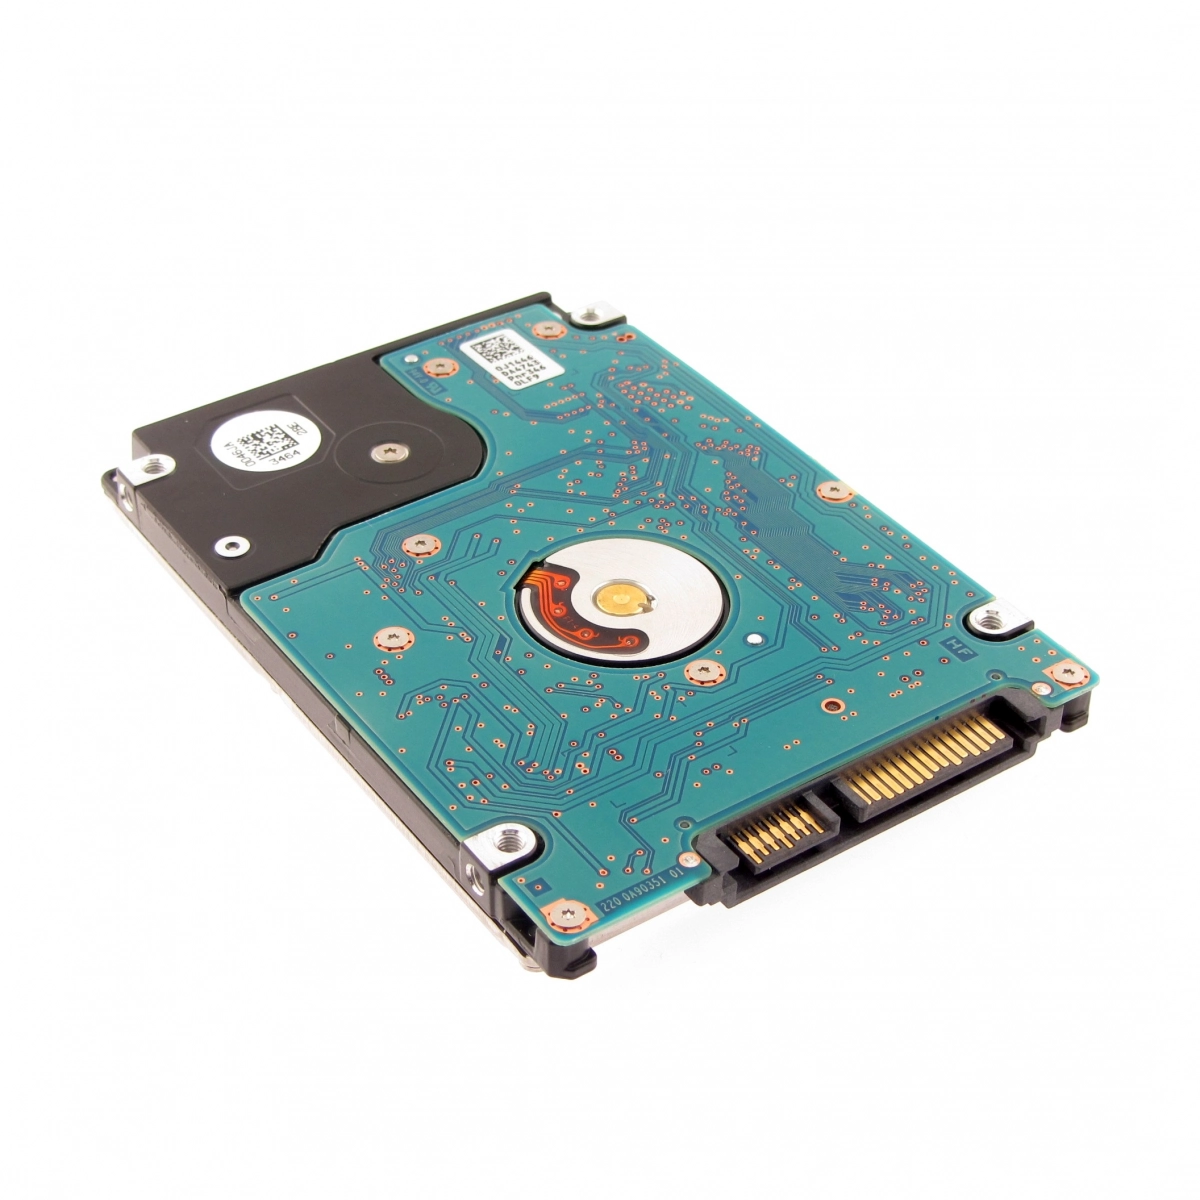 Notebook-Festplatte 500GB, 5400rpm, 16MB für MEDION Akoya E7214 MD98410